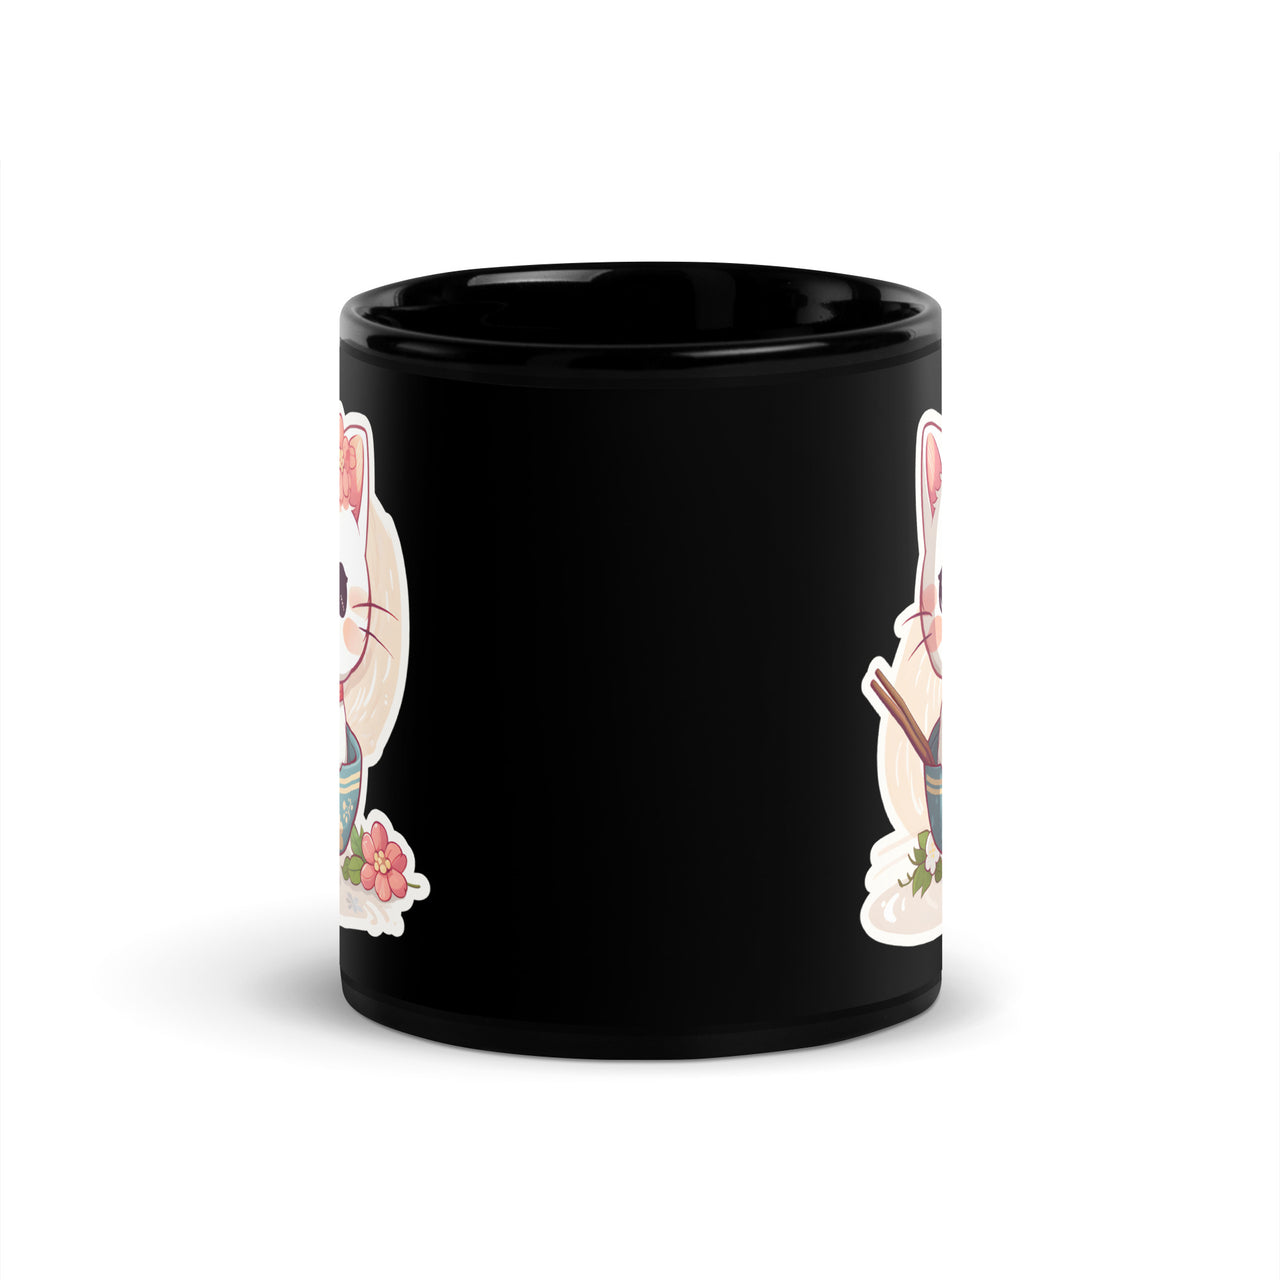 Sorry, No Ramen: Anime Cat in Bowl Black Mug